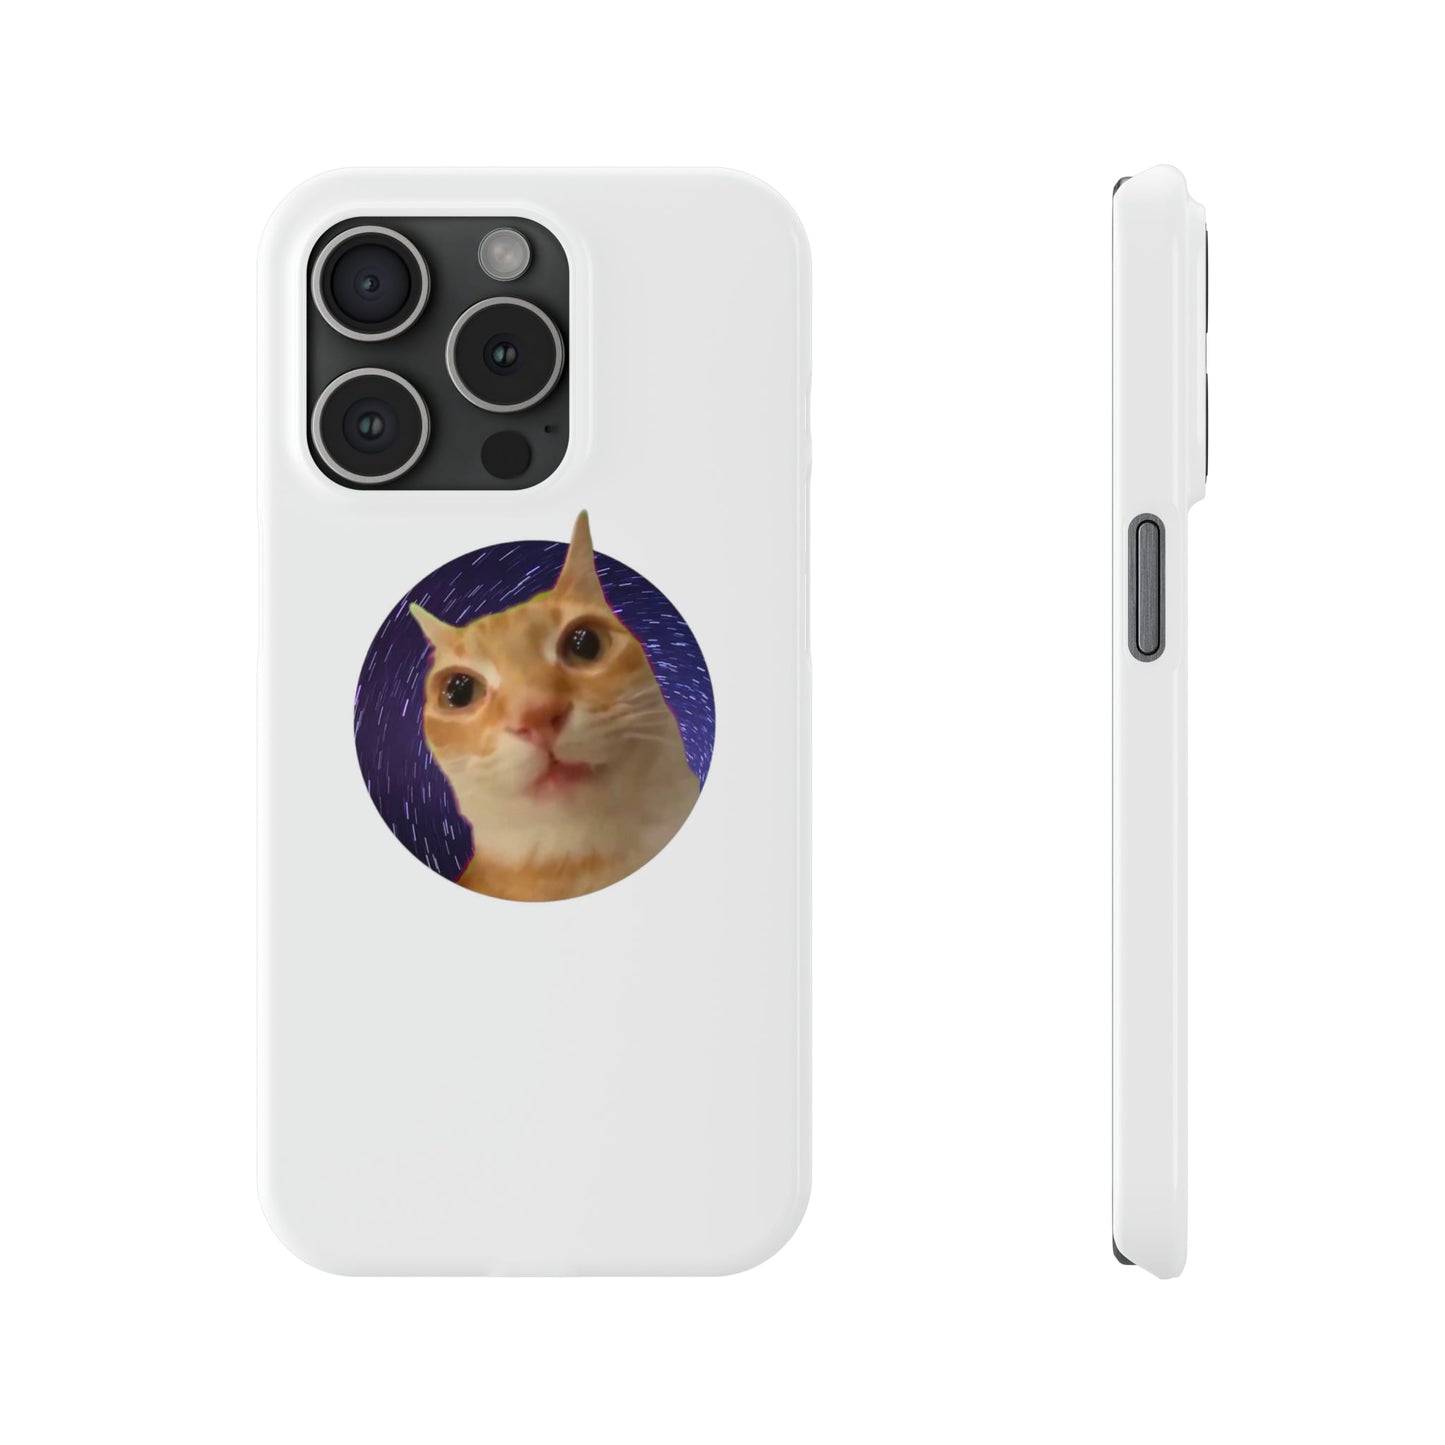 Spaced Out Cat Meme Slim Phone Cases - getallfun